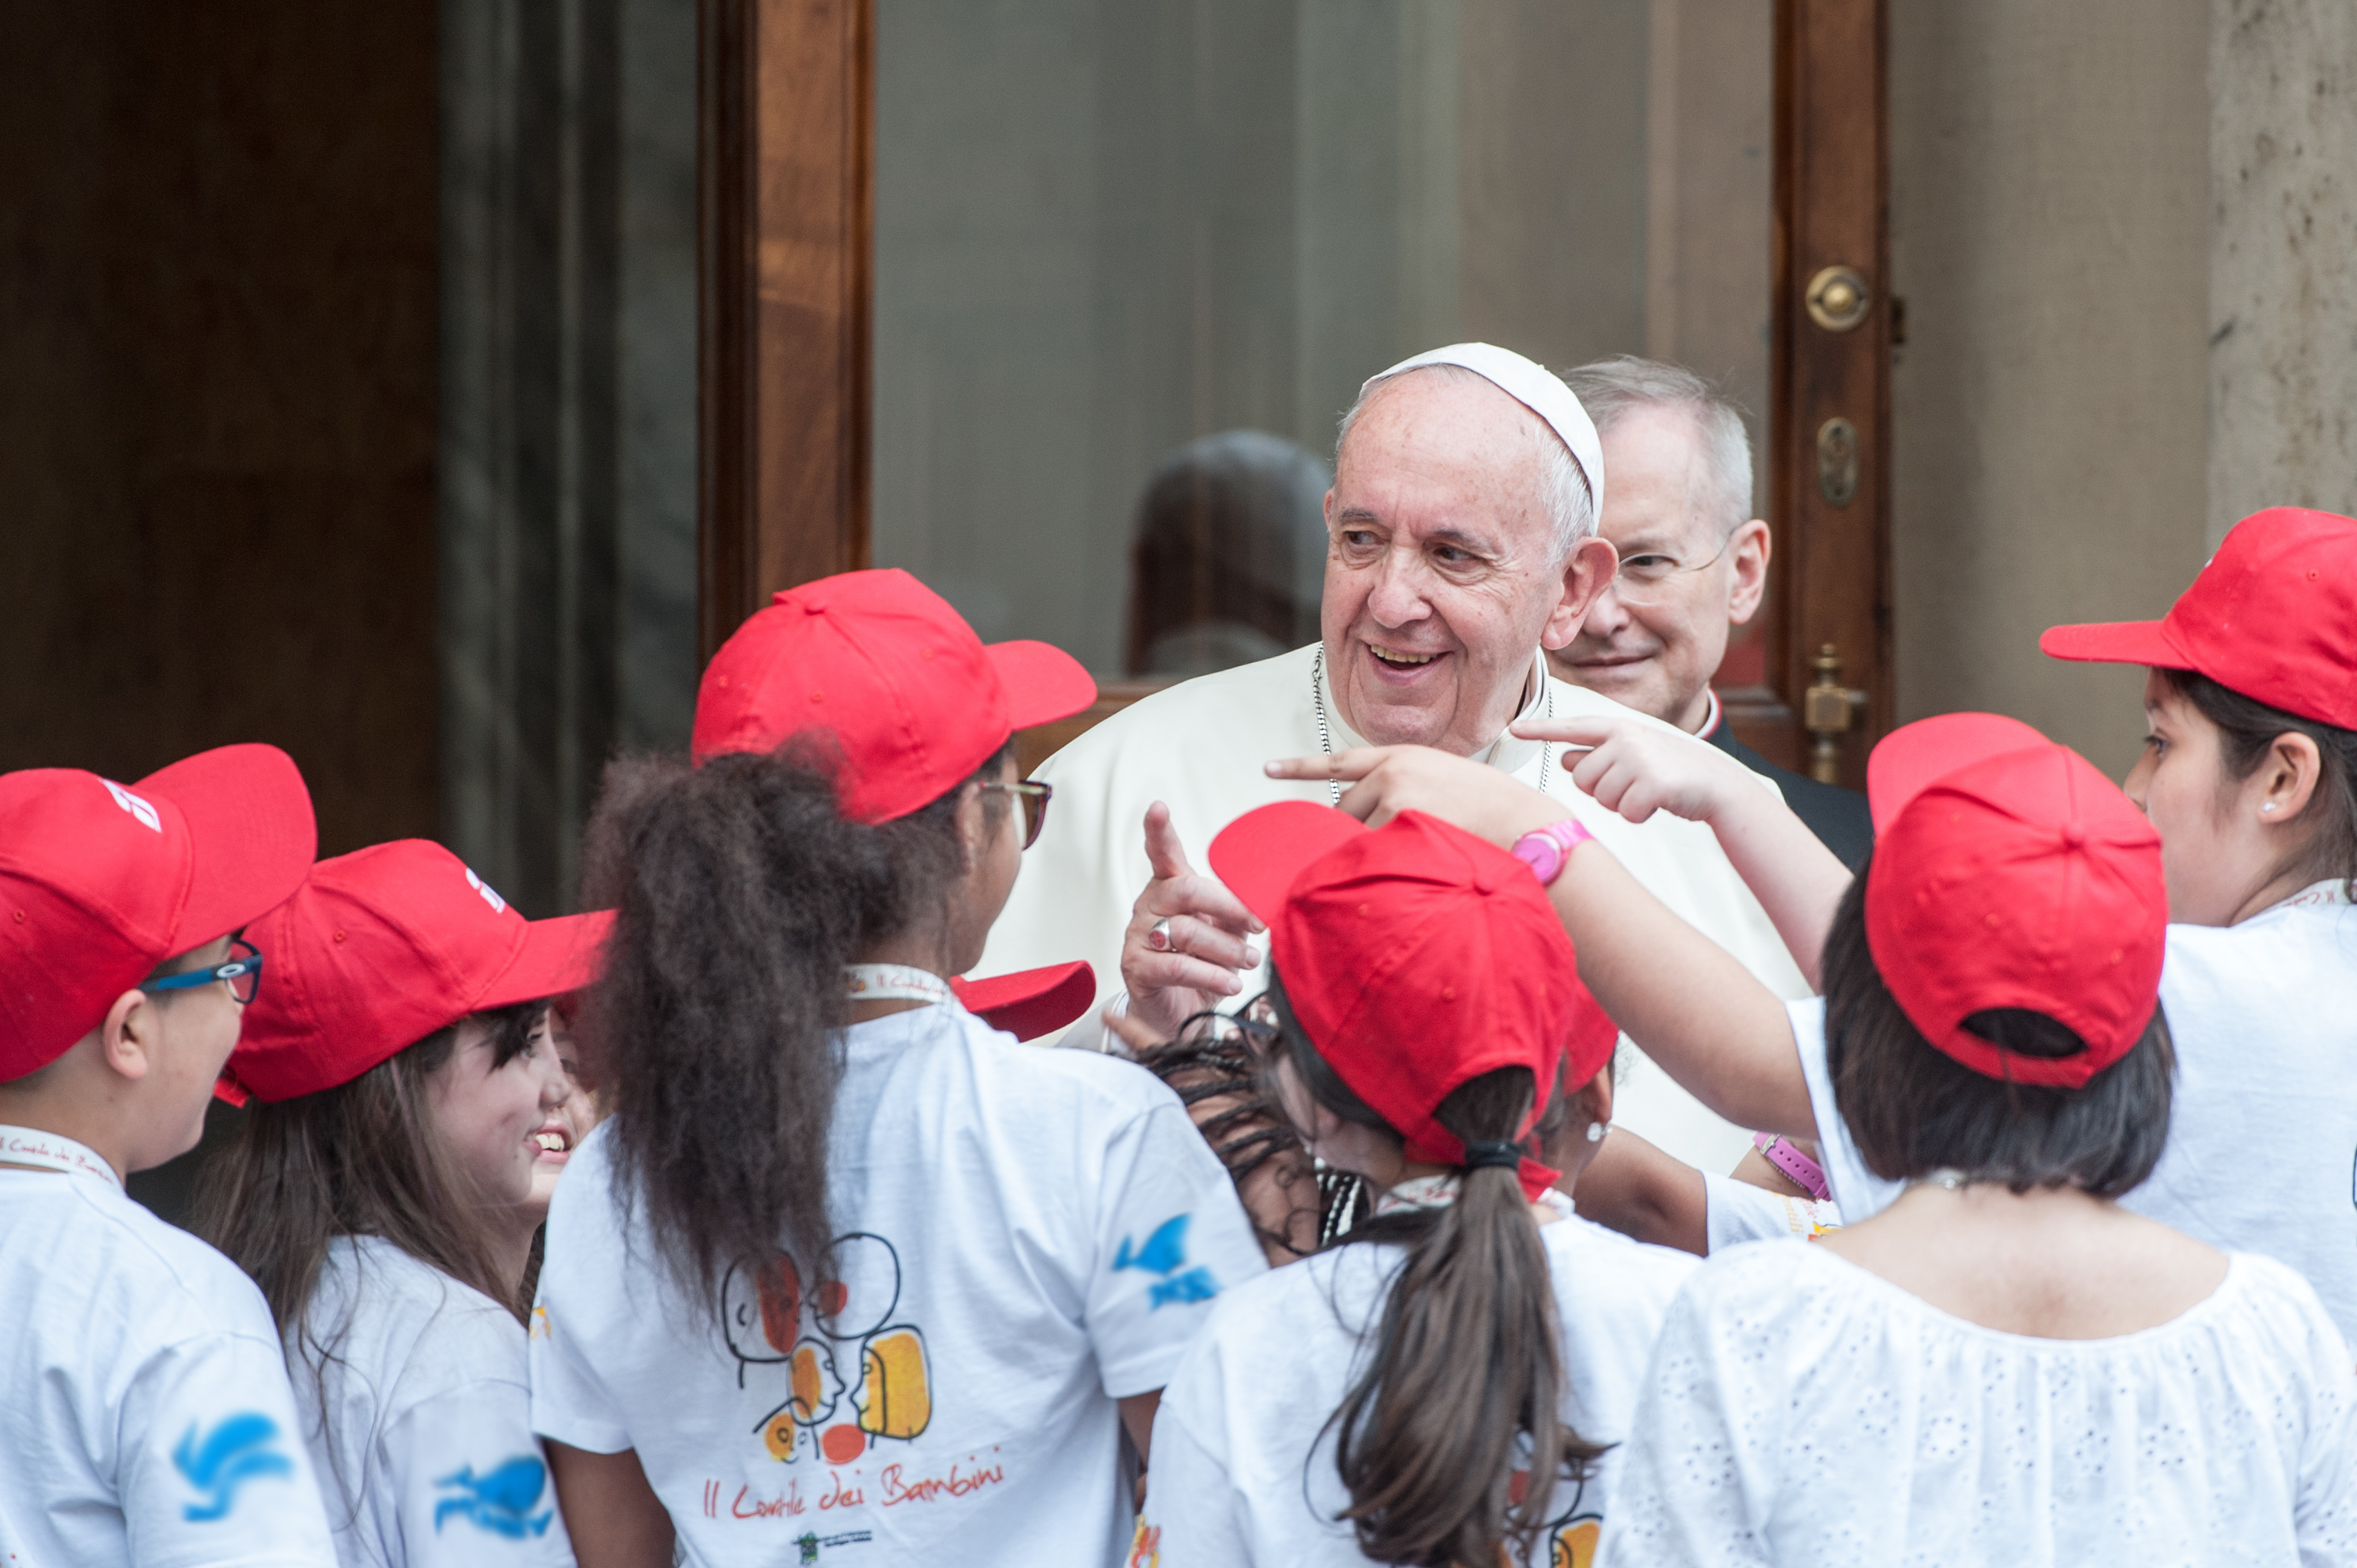 Catholic education key to fighting indifference, pope says